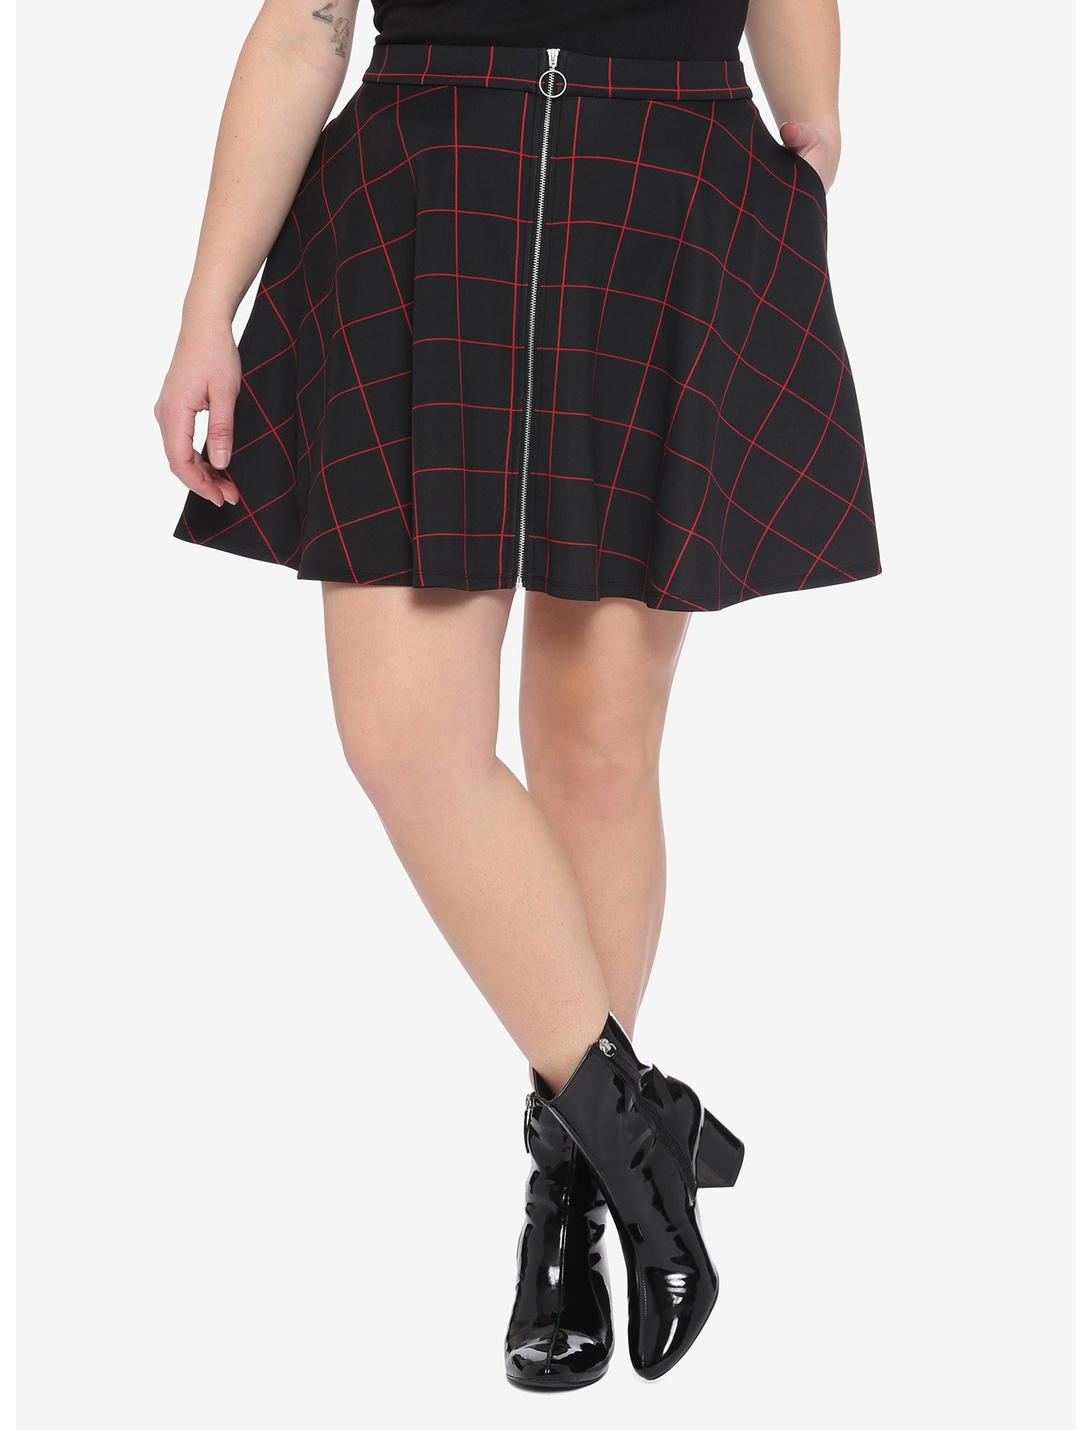 Black & Red Grid O-Ring Skater Skirt Plus Size, PLAID - RED, hi-res